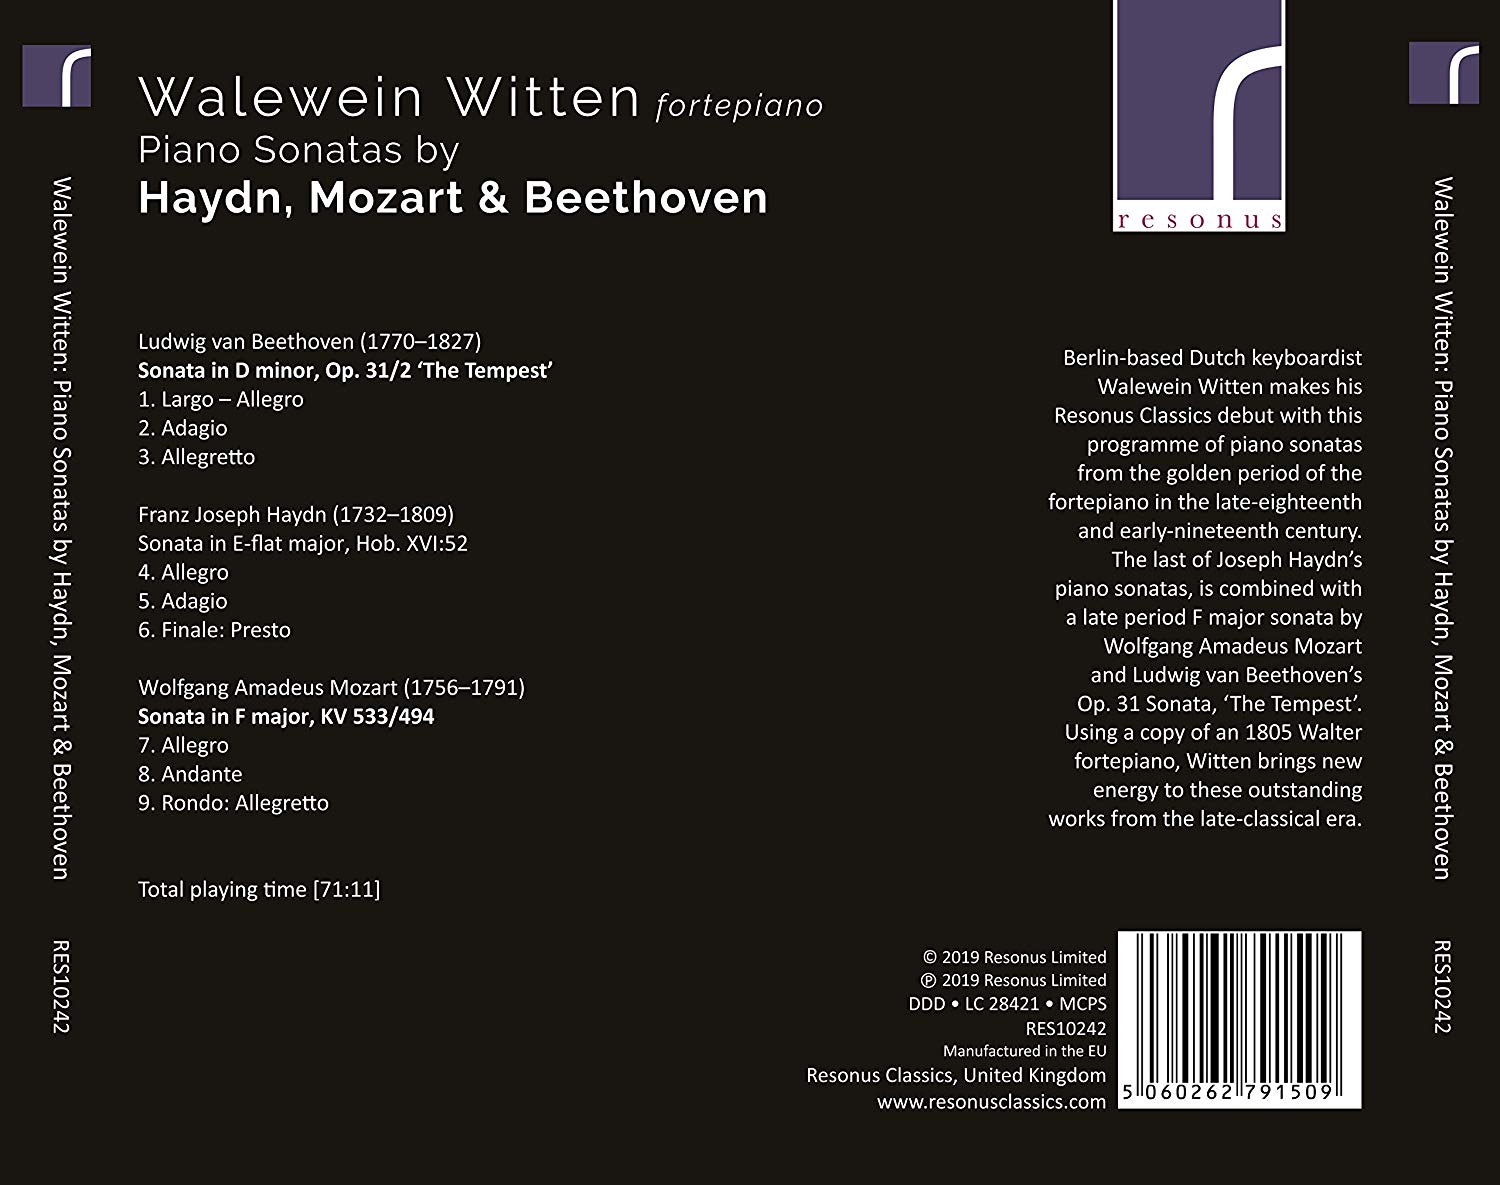 Walewein Witten 하이든 / 모차르트 / 베토벤: 피아노 소나타 (Haydn / Mozart / Beethoven: Piano Sonatas)